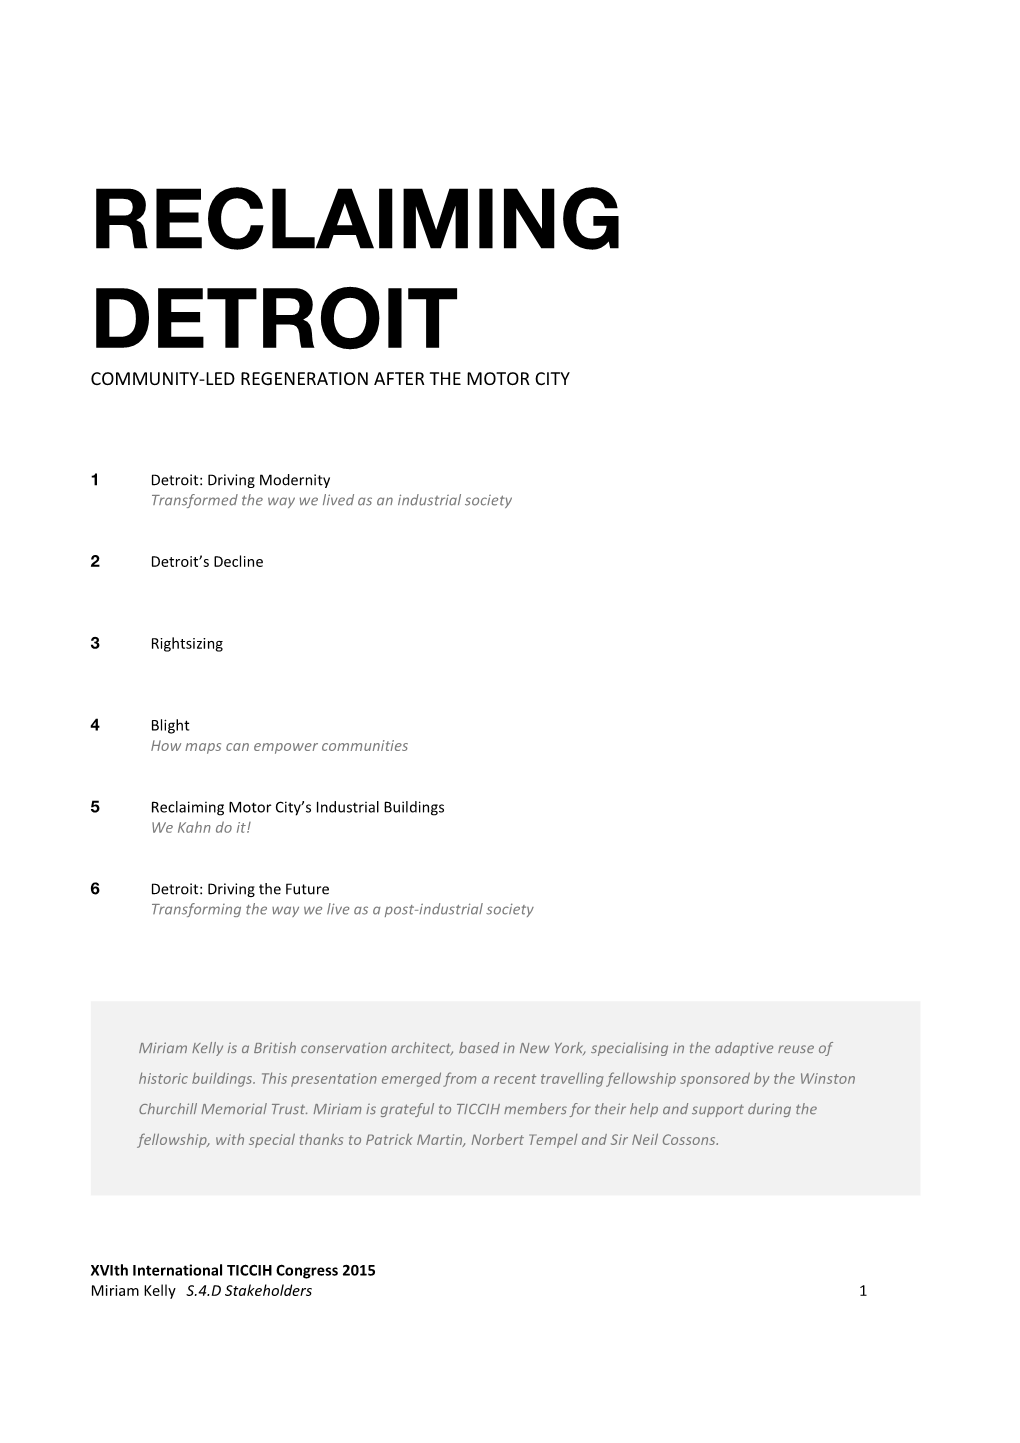 Reclaiming Detroit==